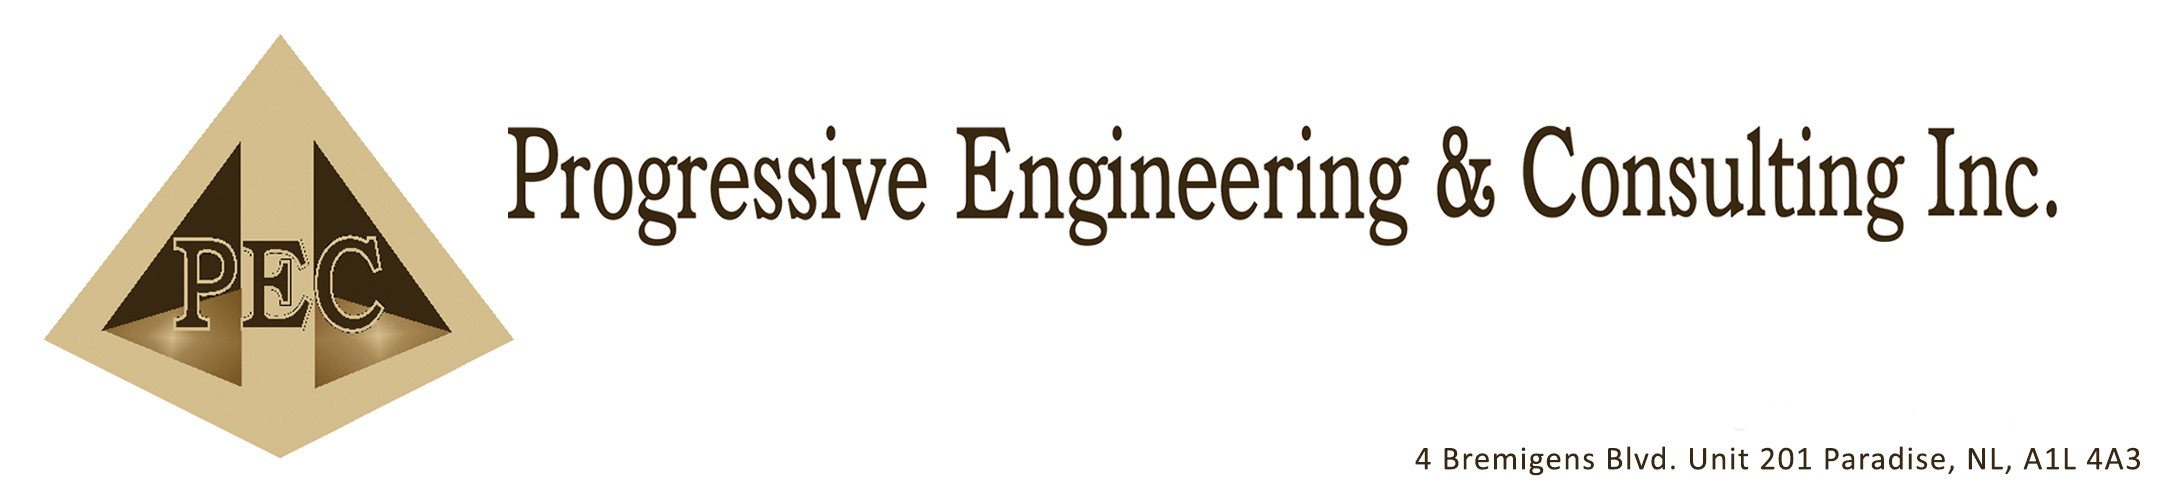 Progressive Engineering & Consulting Inc.